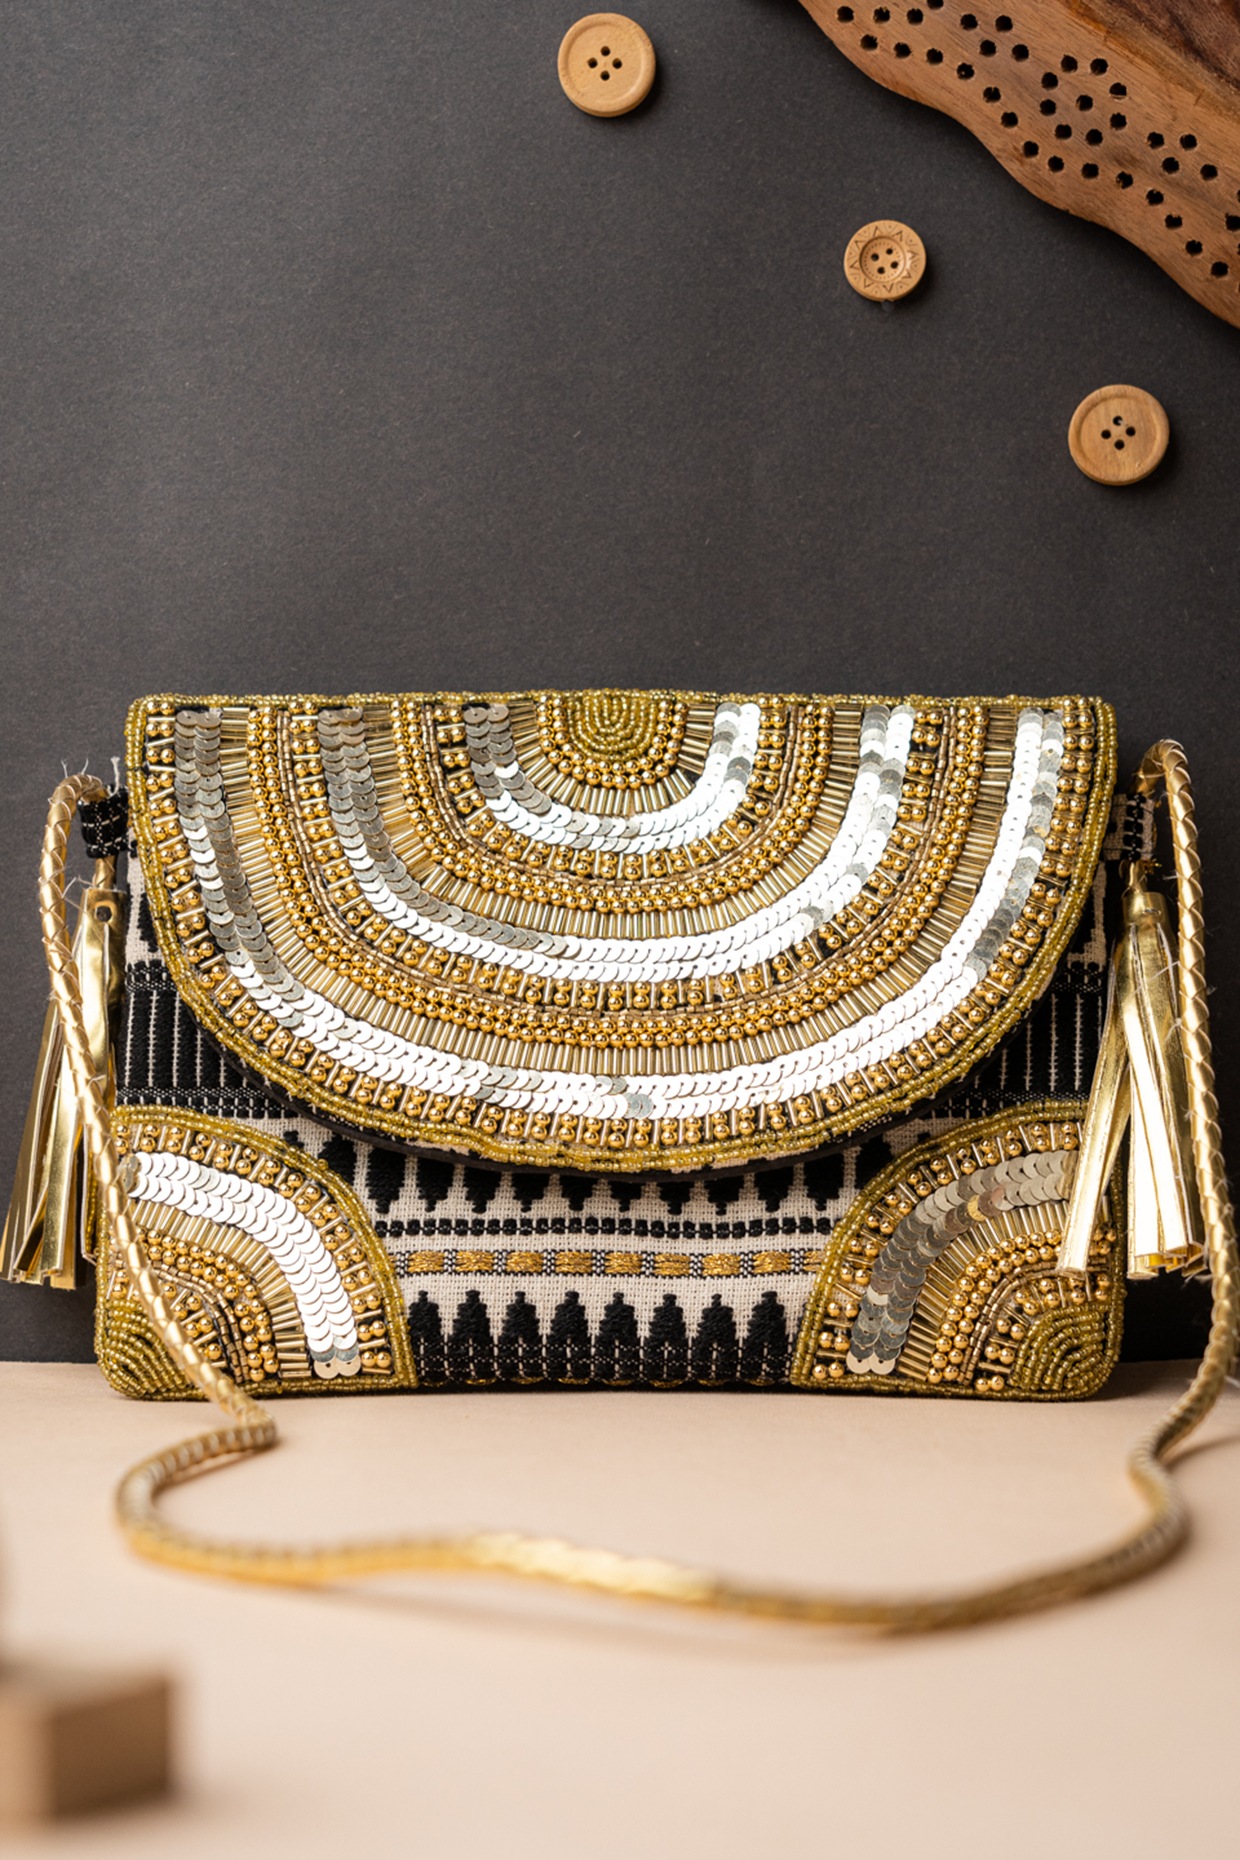 Nayaab by Sonia Silk Embellished Potli Bag | Accessories, Handbags, Potlis,  Bags, Gold, Silk, Pearls | Potli bags, Gold pearl, Embellished